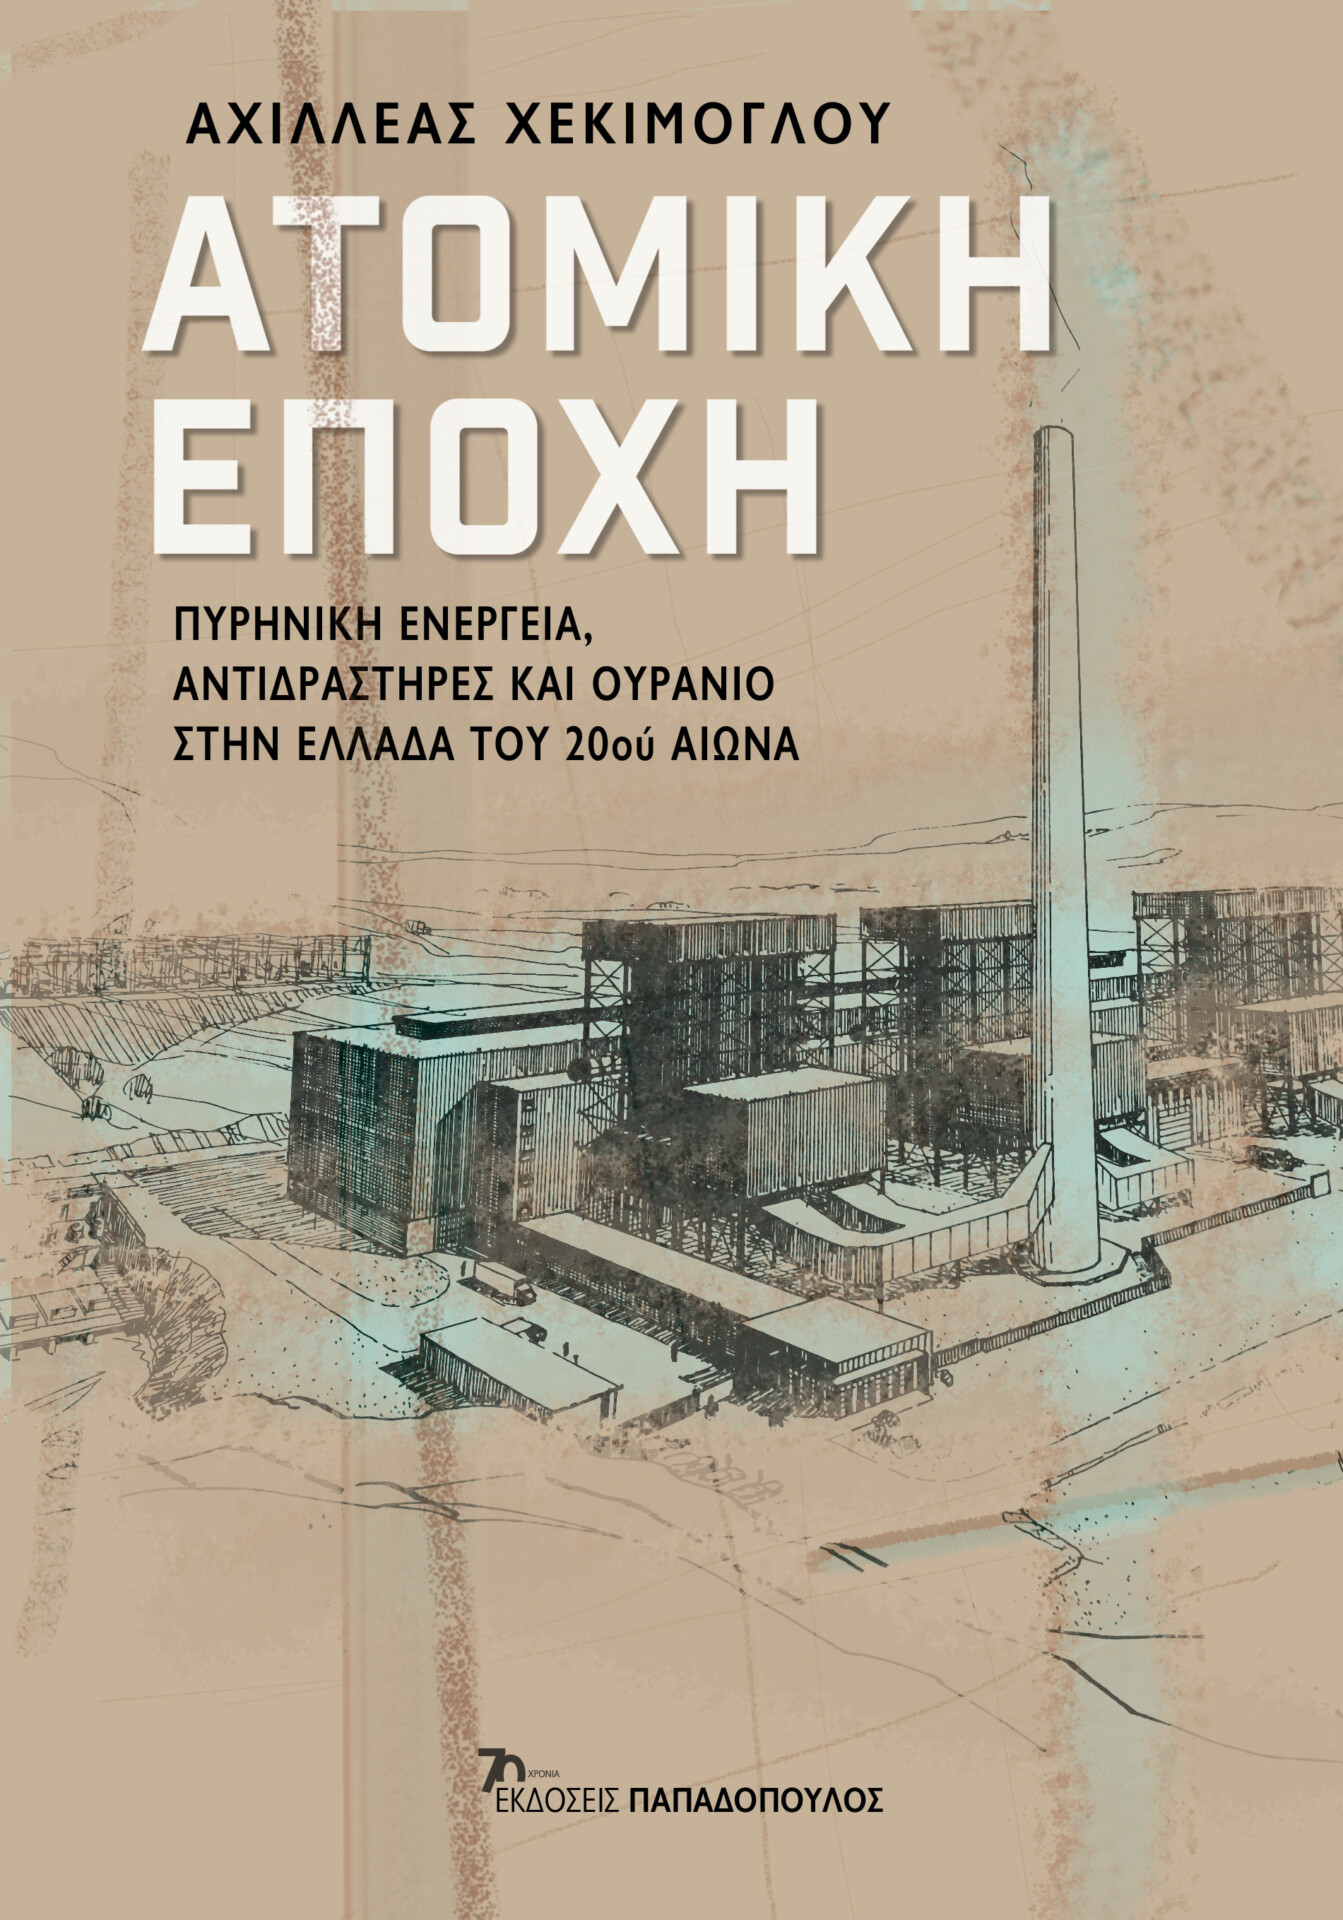 To βιβλίο του Αχιλλέα Χεκίμογλου, «Ατομική Εποχή», ανοίγει για πρώτη φορά τους φακέλους της πυρηνικής ενέργειας στην Ελλάδα © ΔΤ